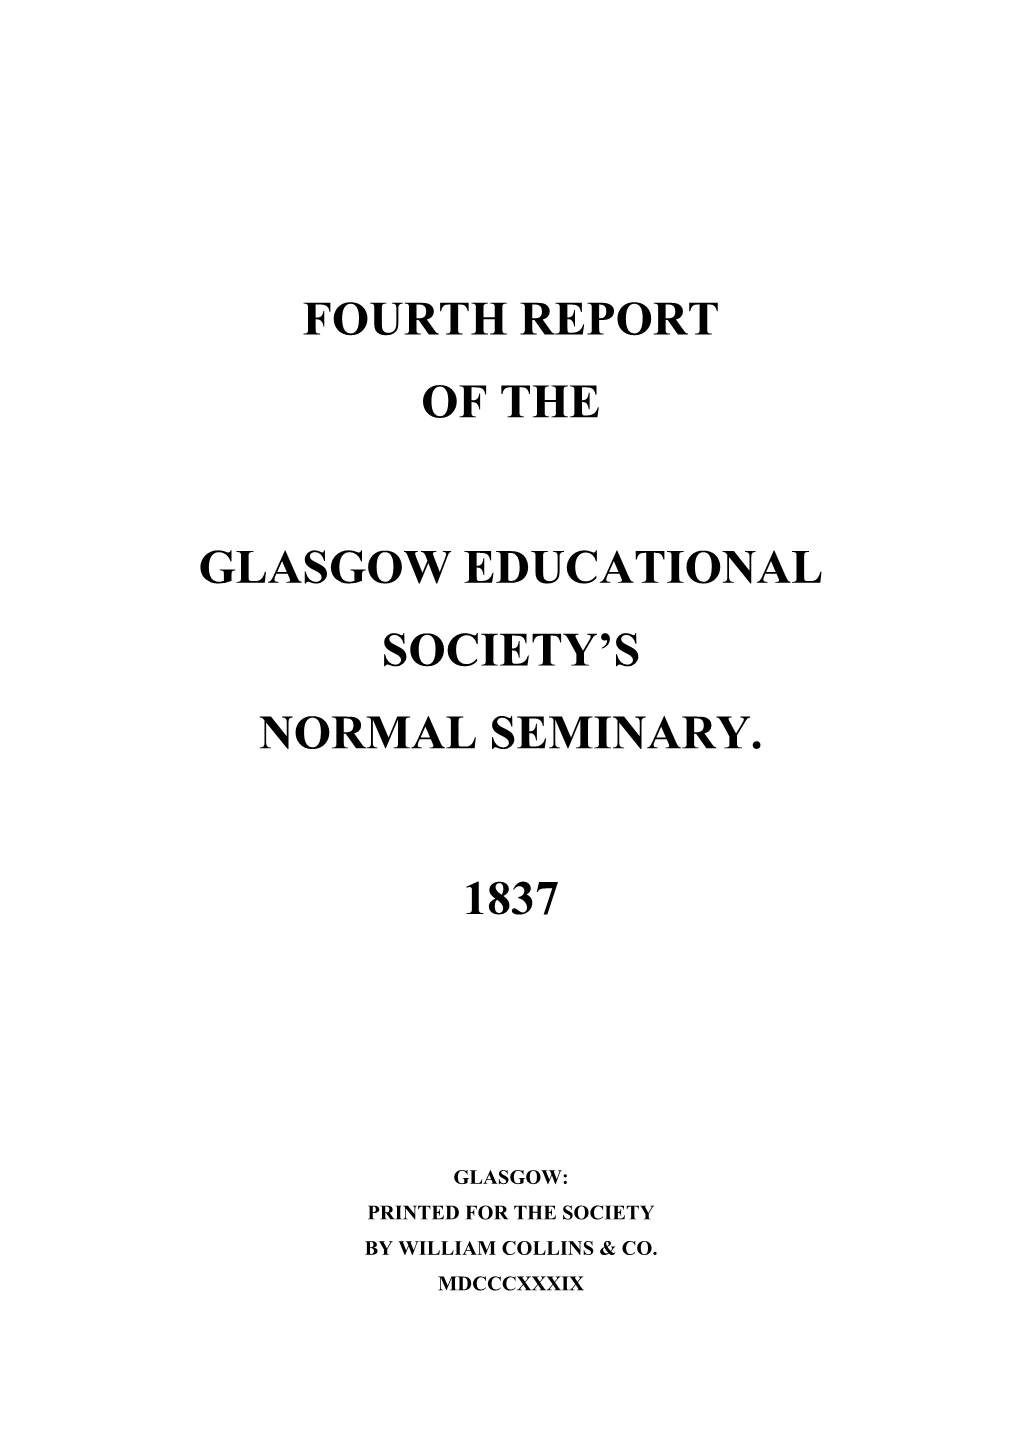 Glasgow Educational Society S